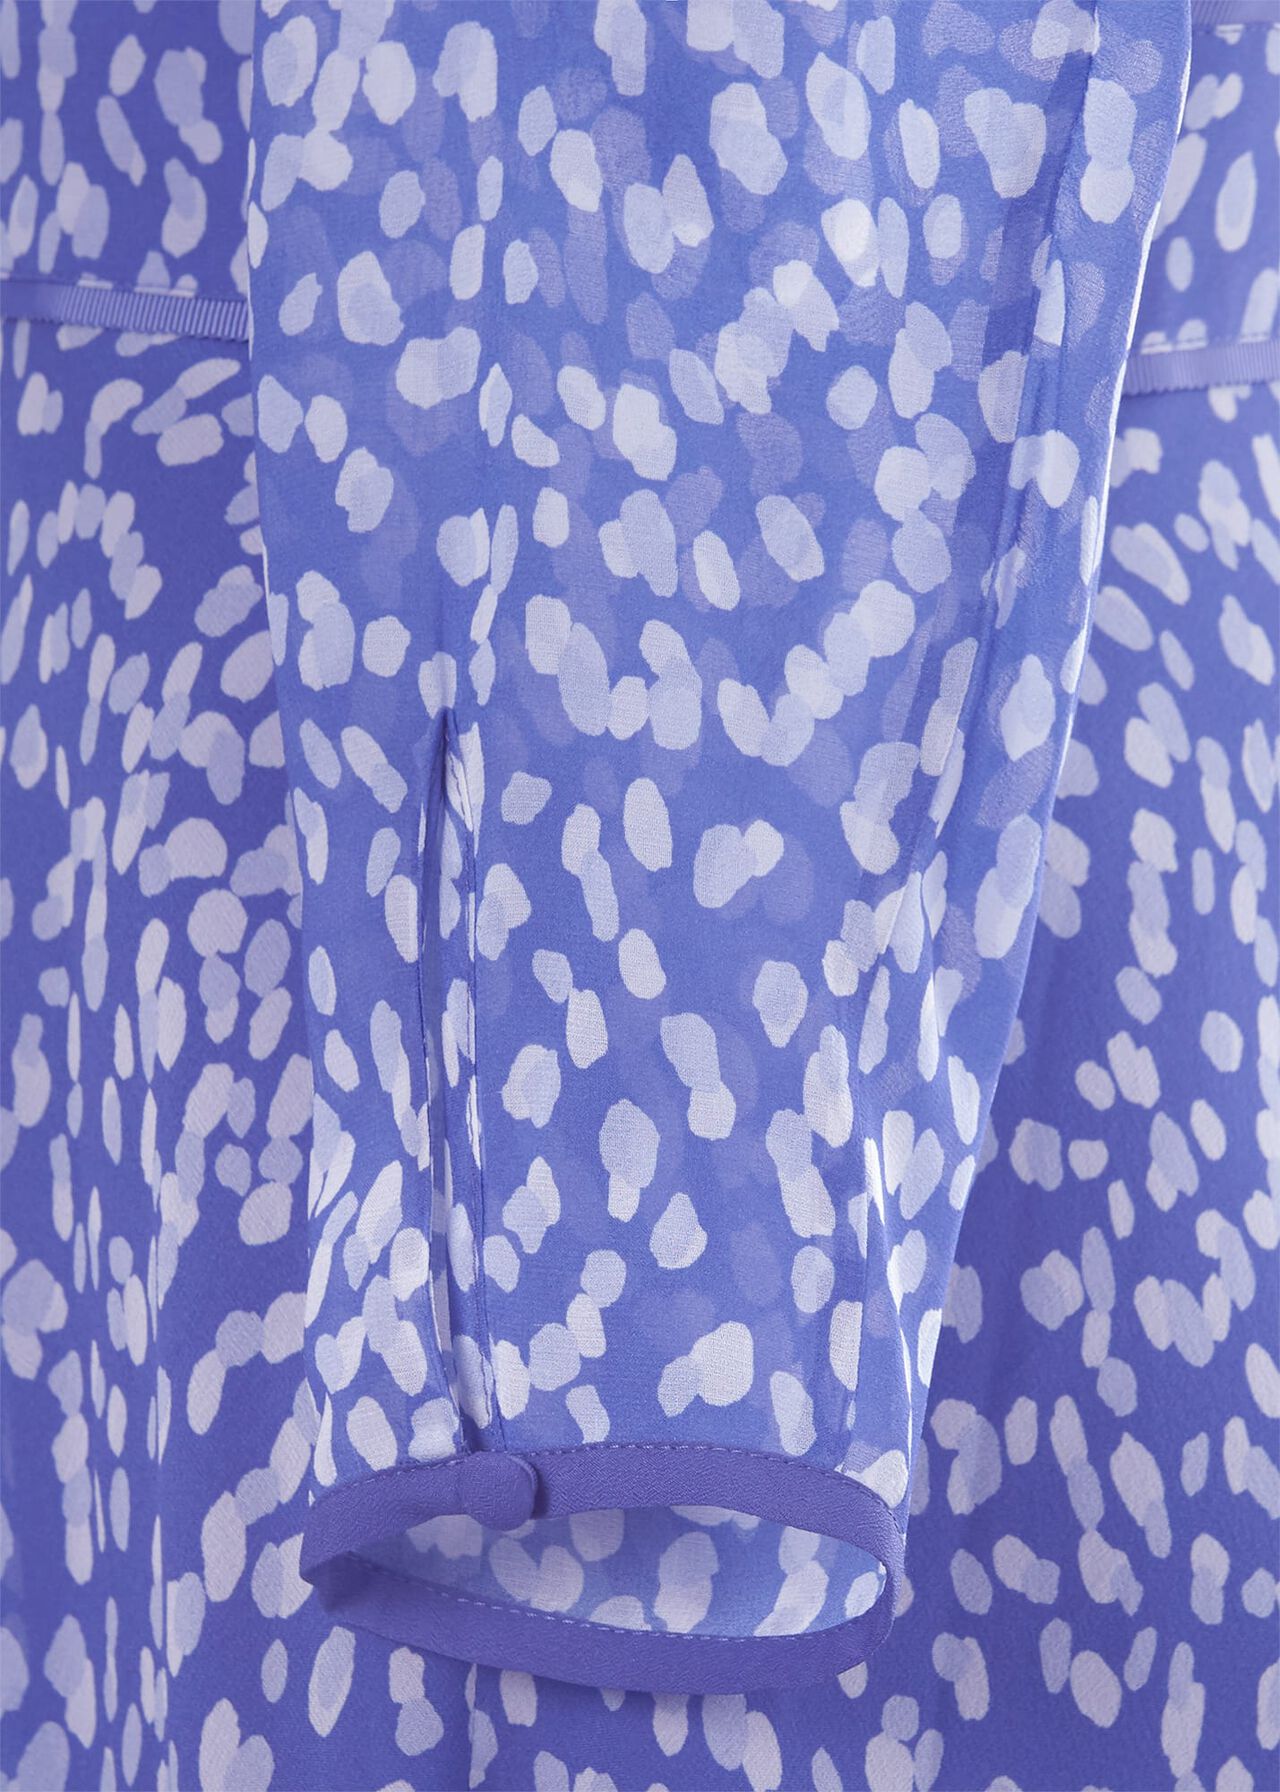 Helena Silk Midi Dress, Blue Multi, hi-res